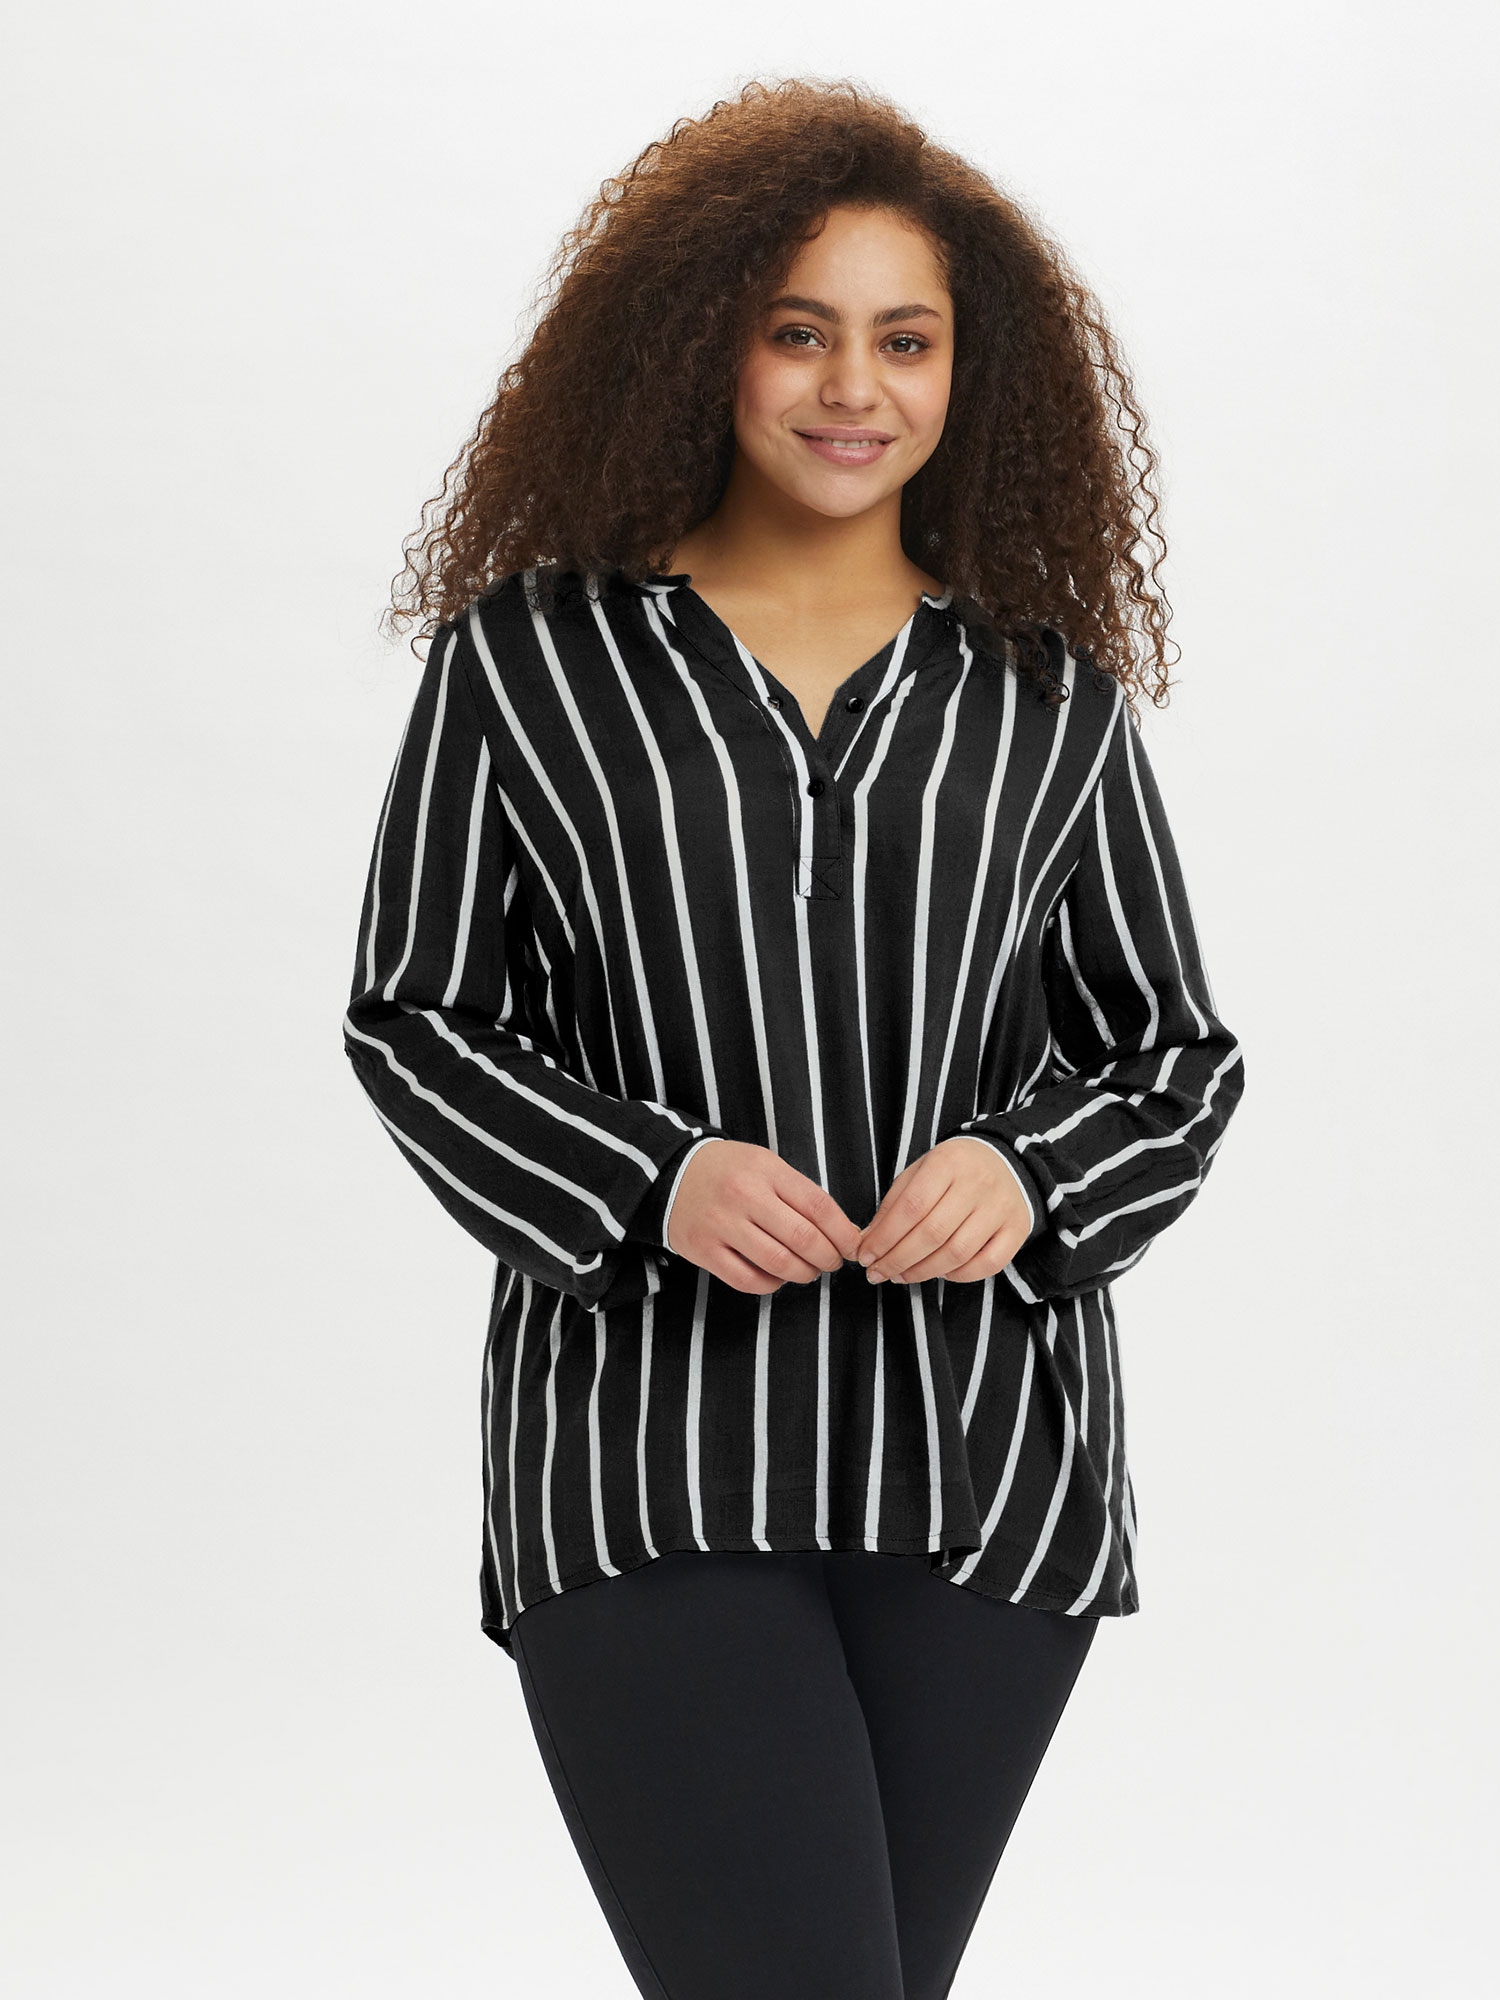 KC Sida - Viskoseskjorte med klassiske svarte og hvite striper fra Kaffe Curve